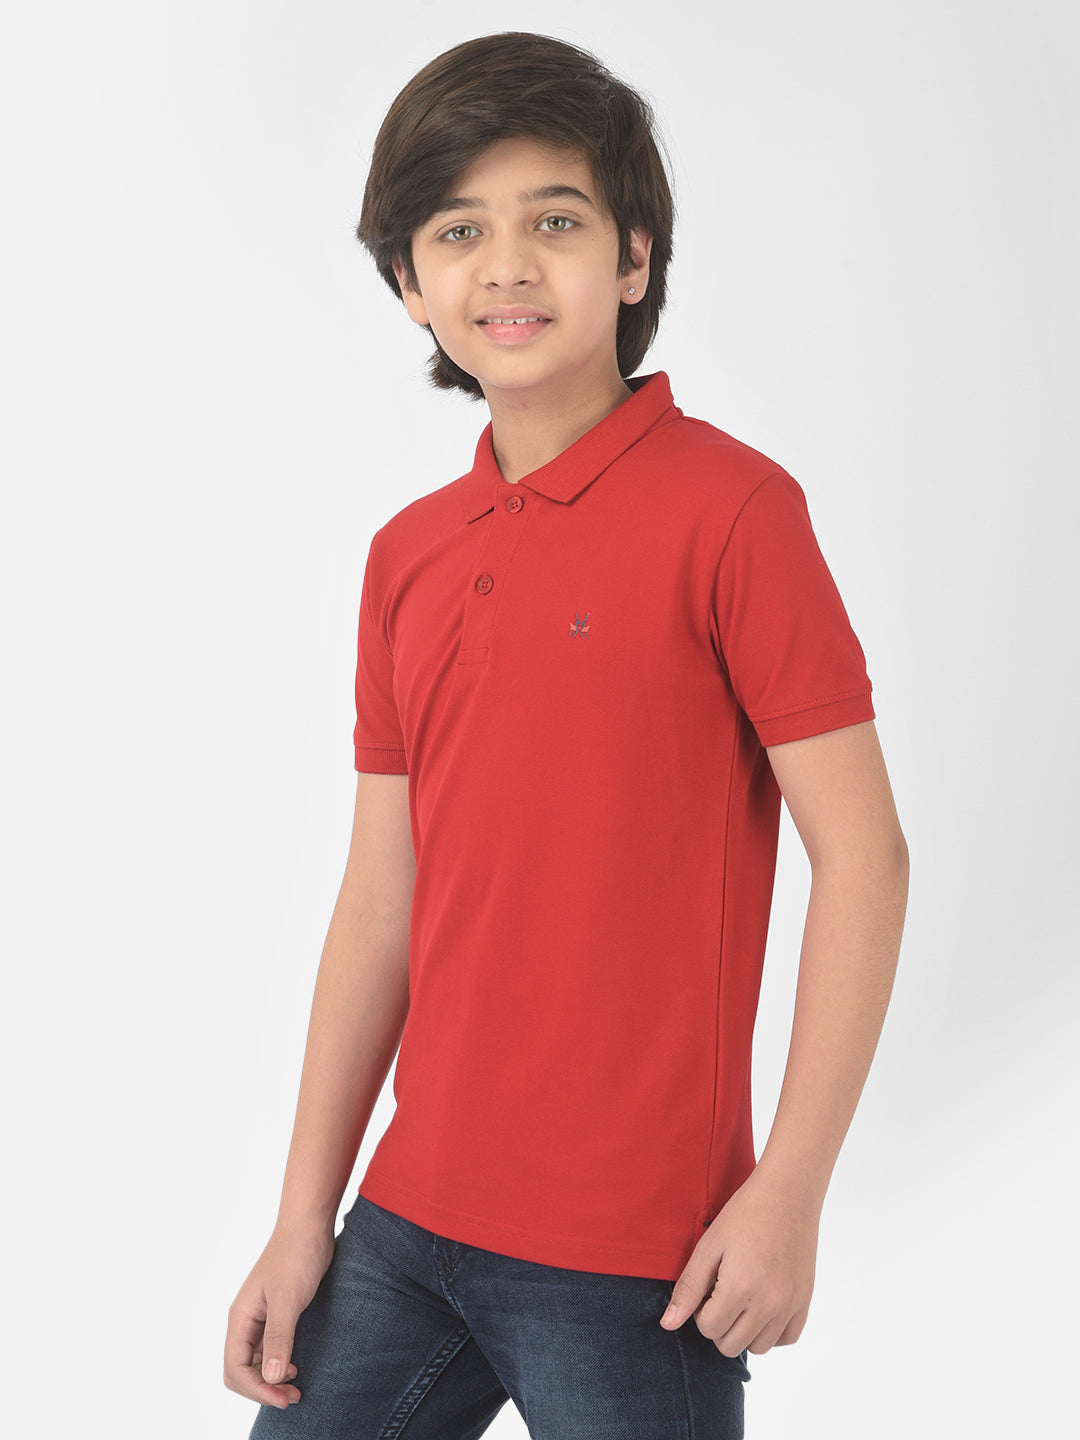 Red Polo T-shirt - Boys T-Shirts